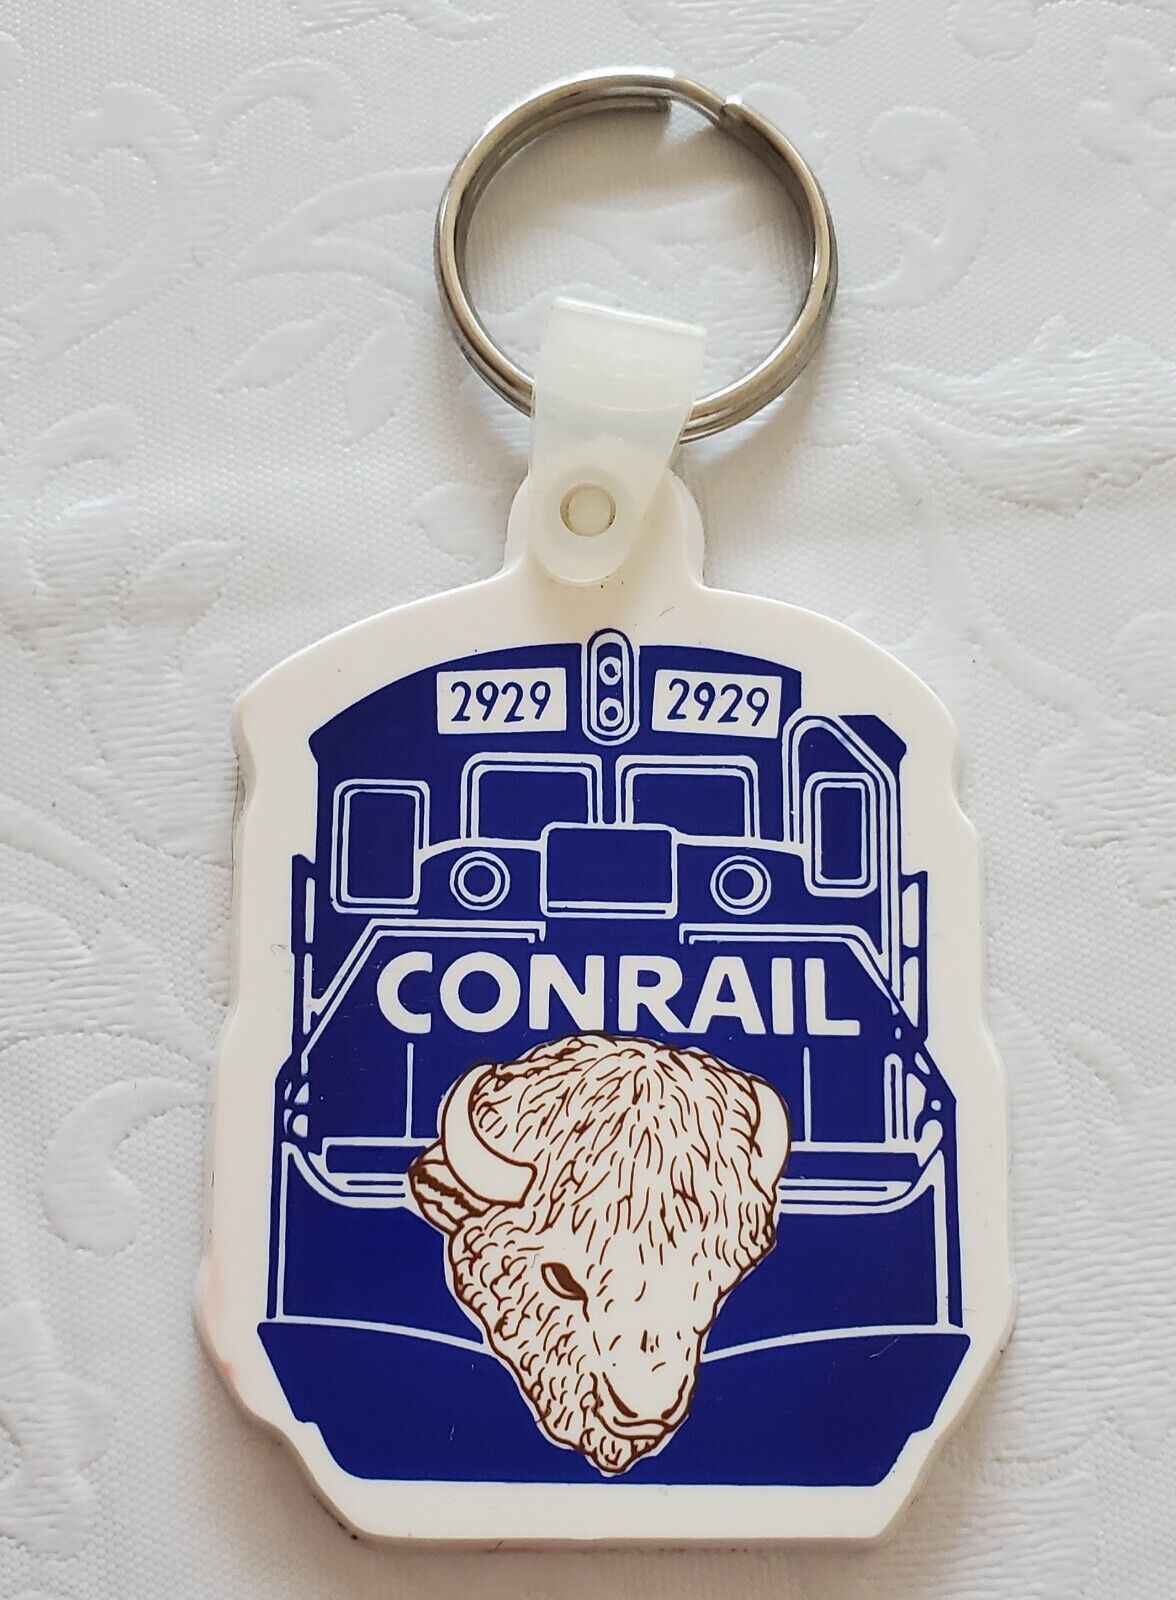 Conrail Railway - Buffalo Division - Vintage Keychain - CR2929 -NOS